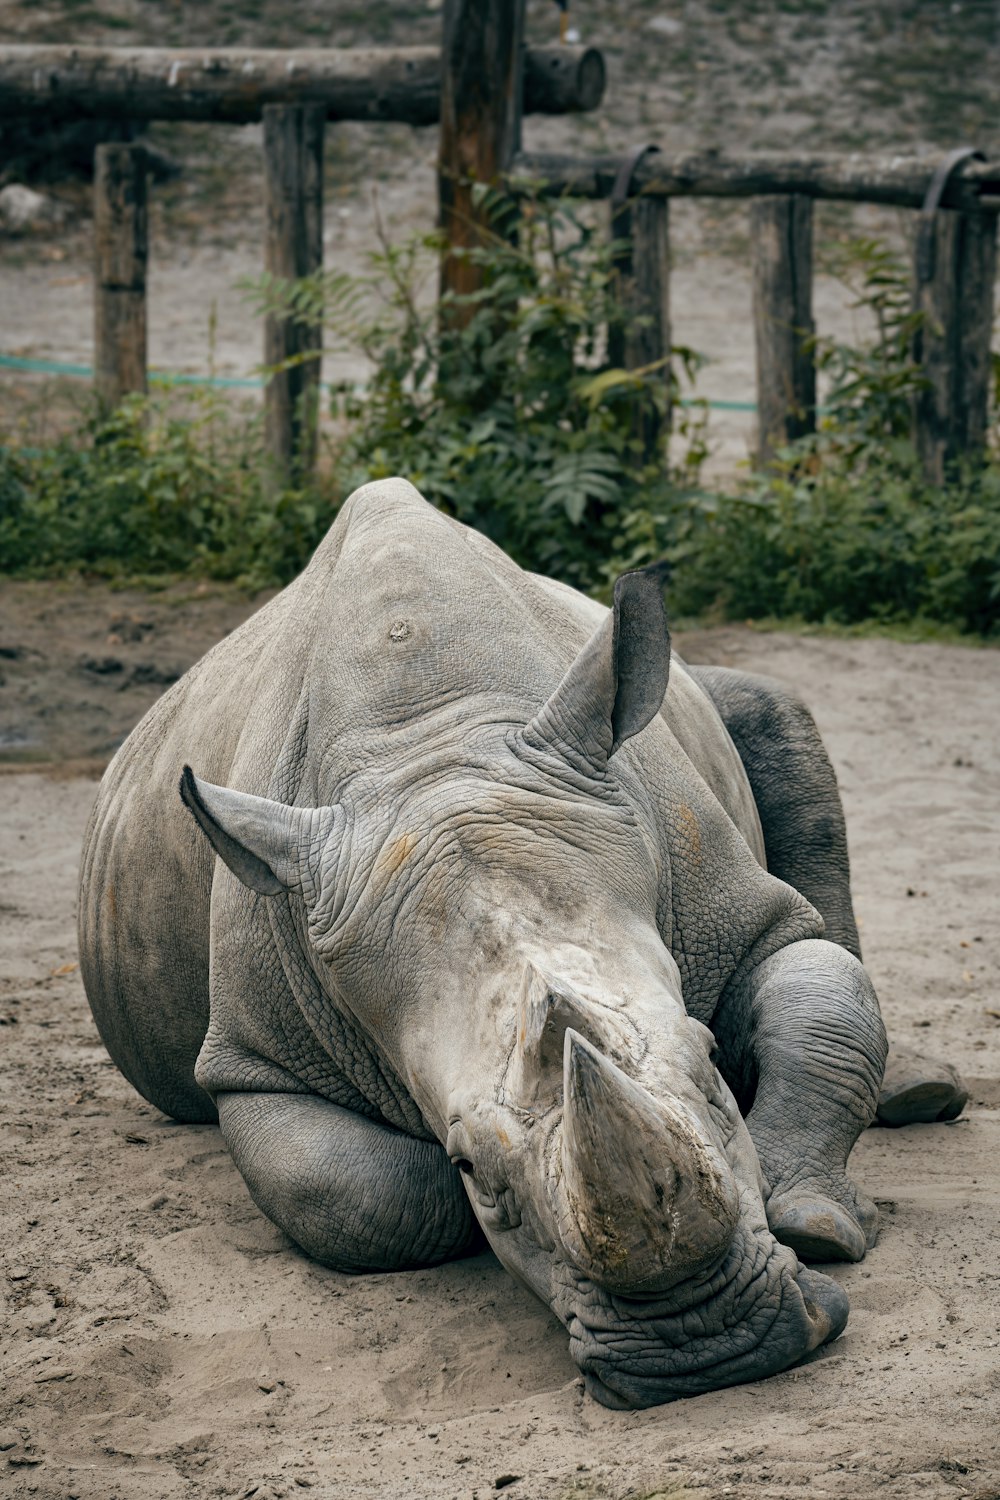 a rhino lying on the ground